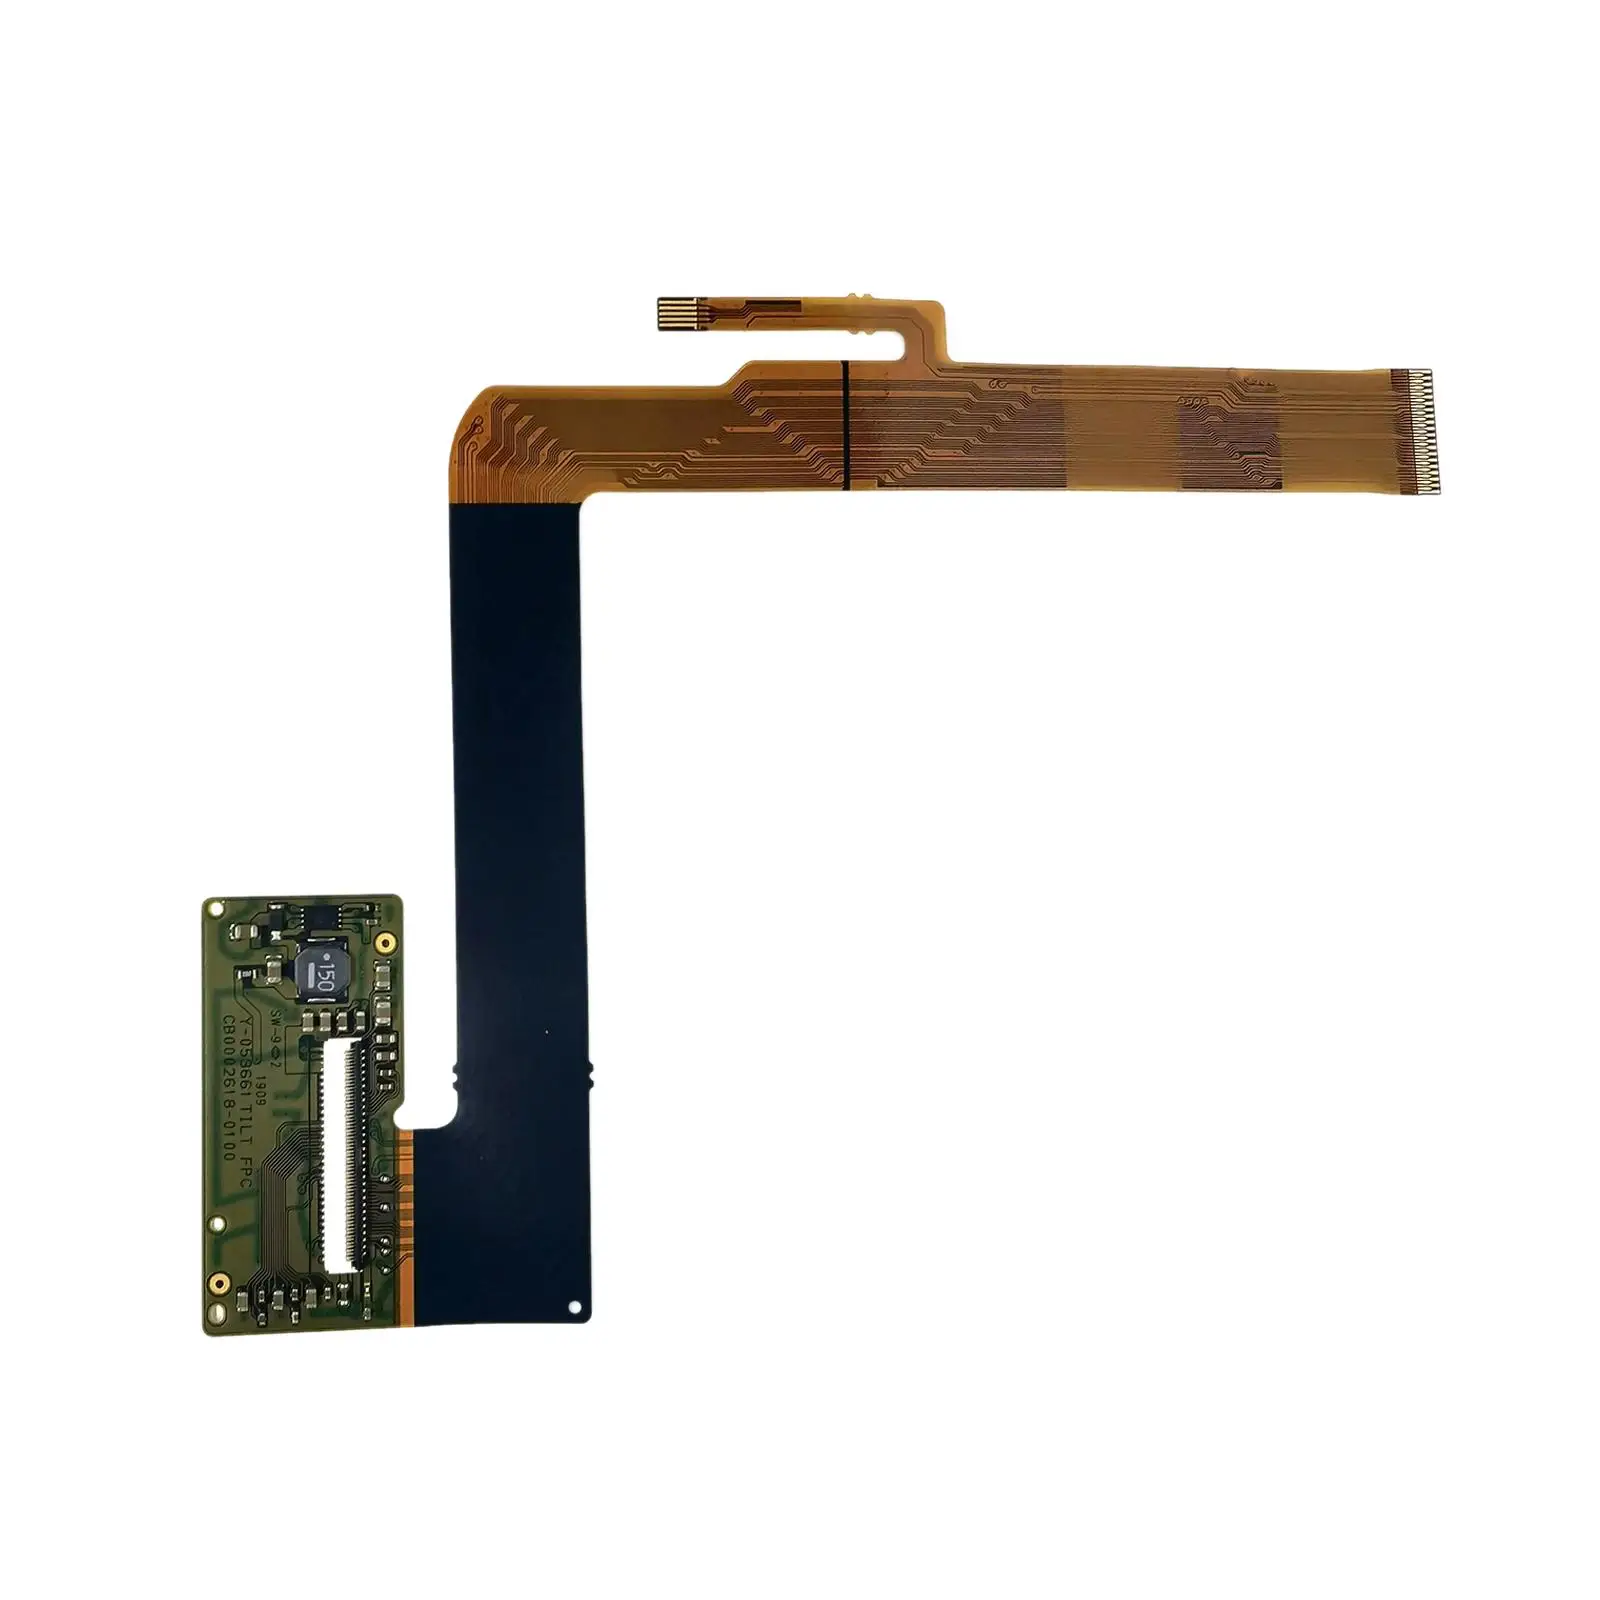 LCD Display Flex Cable Replace Parts for XT20 X-T20 Digital Camera Repair Parts